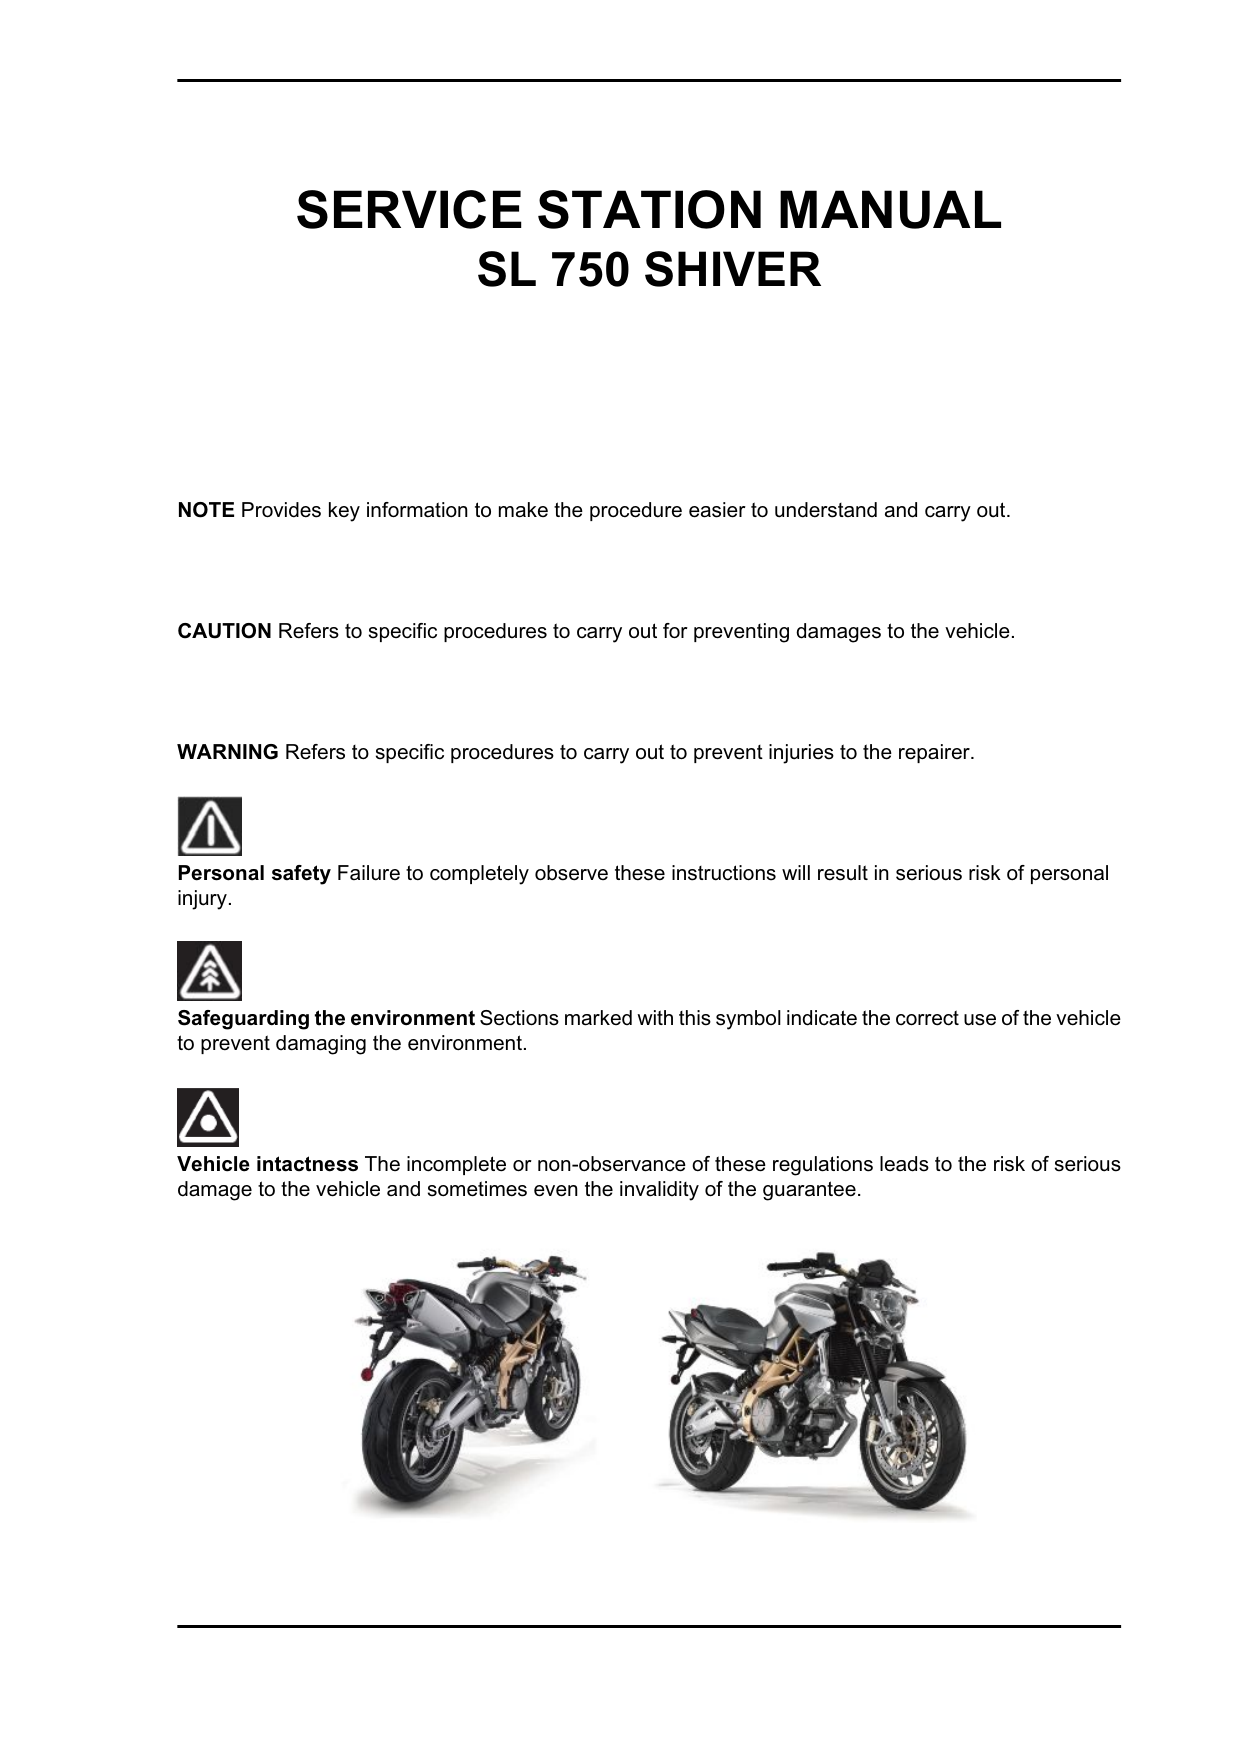 Aprilia SL 750 Shiver service station manual Preview image 3